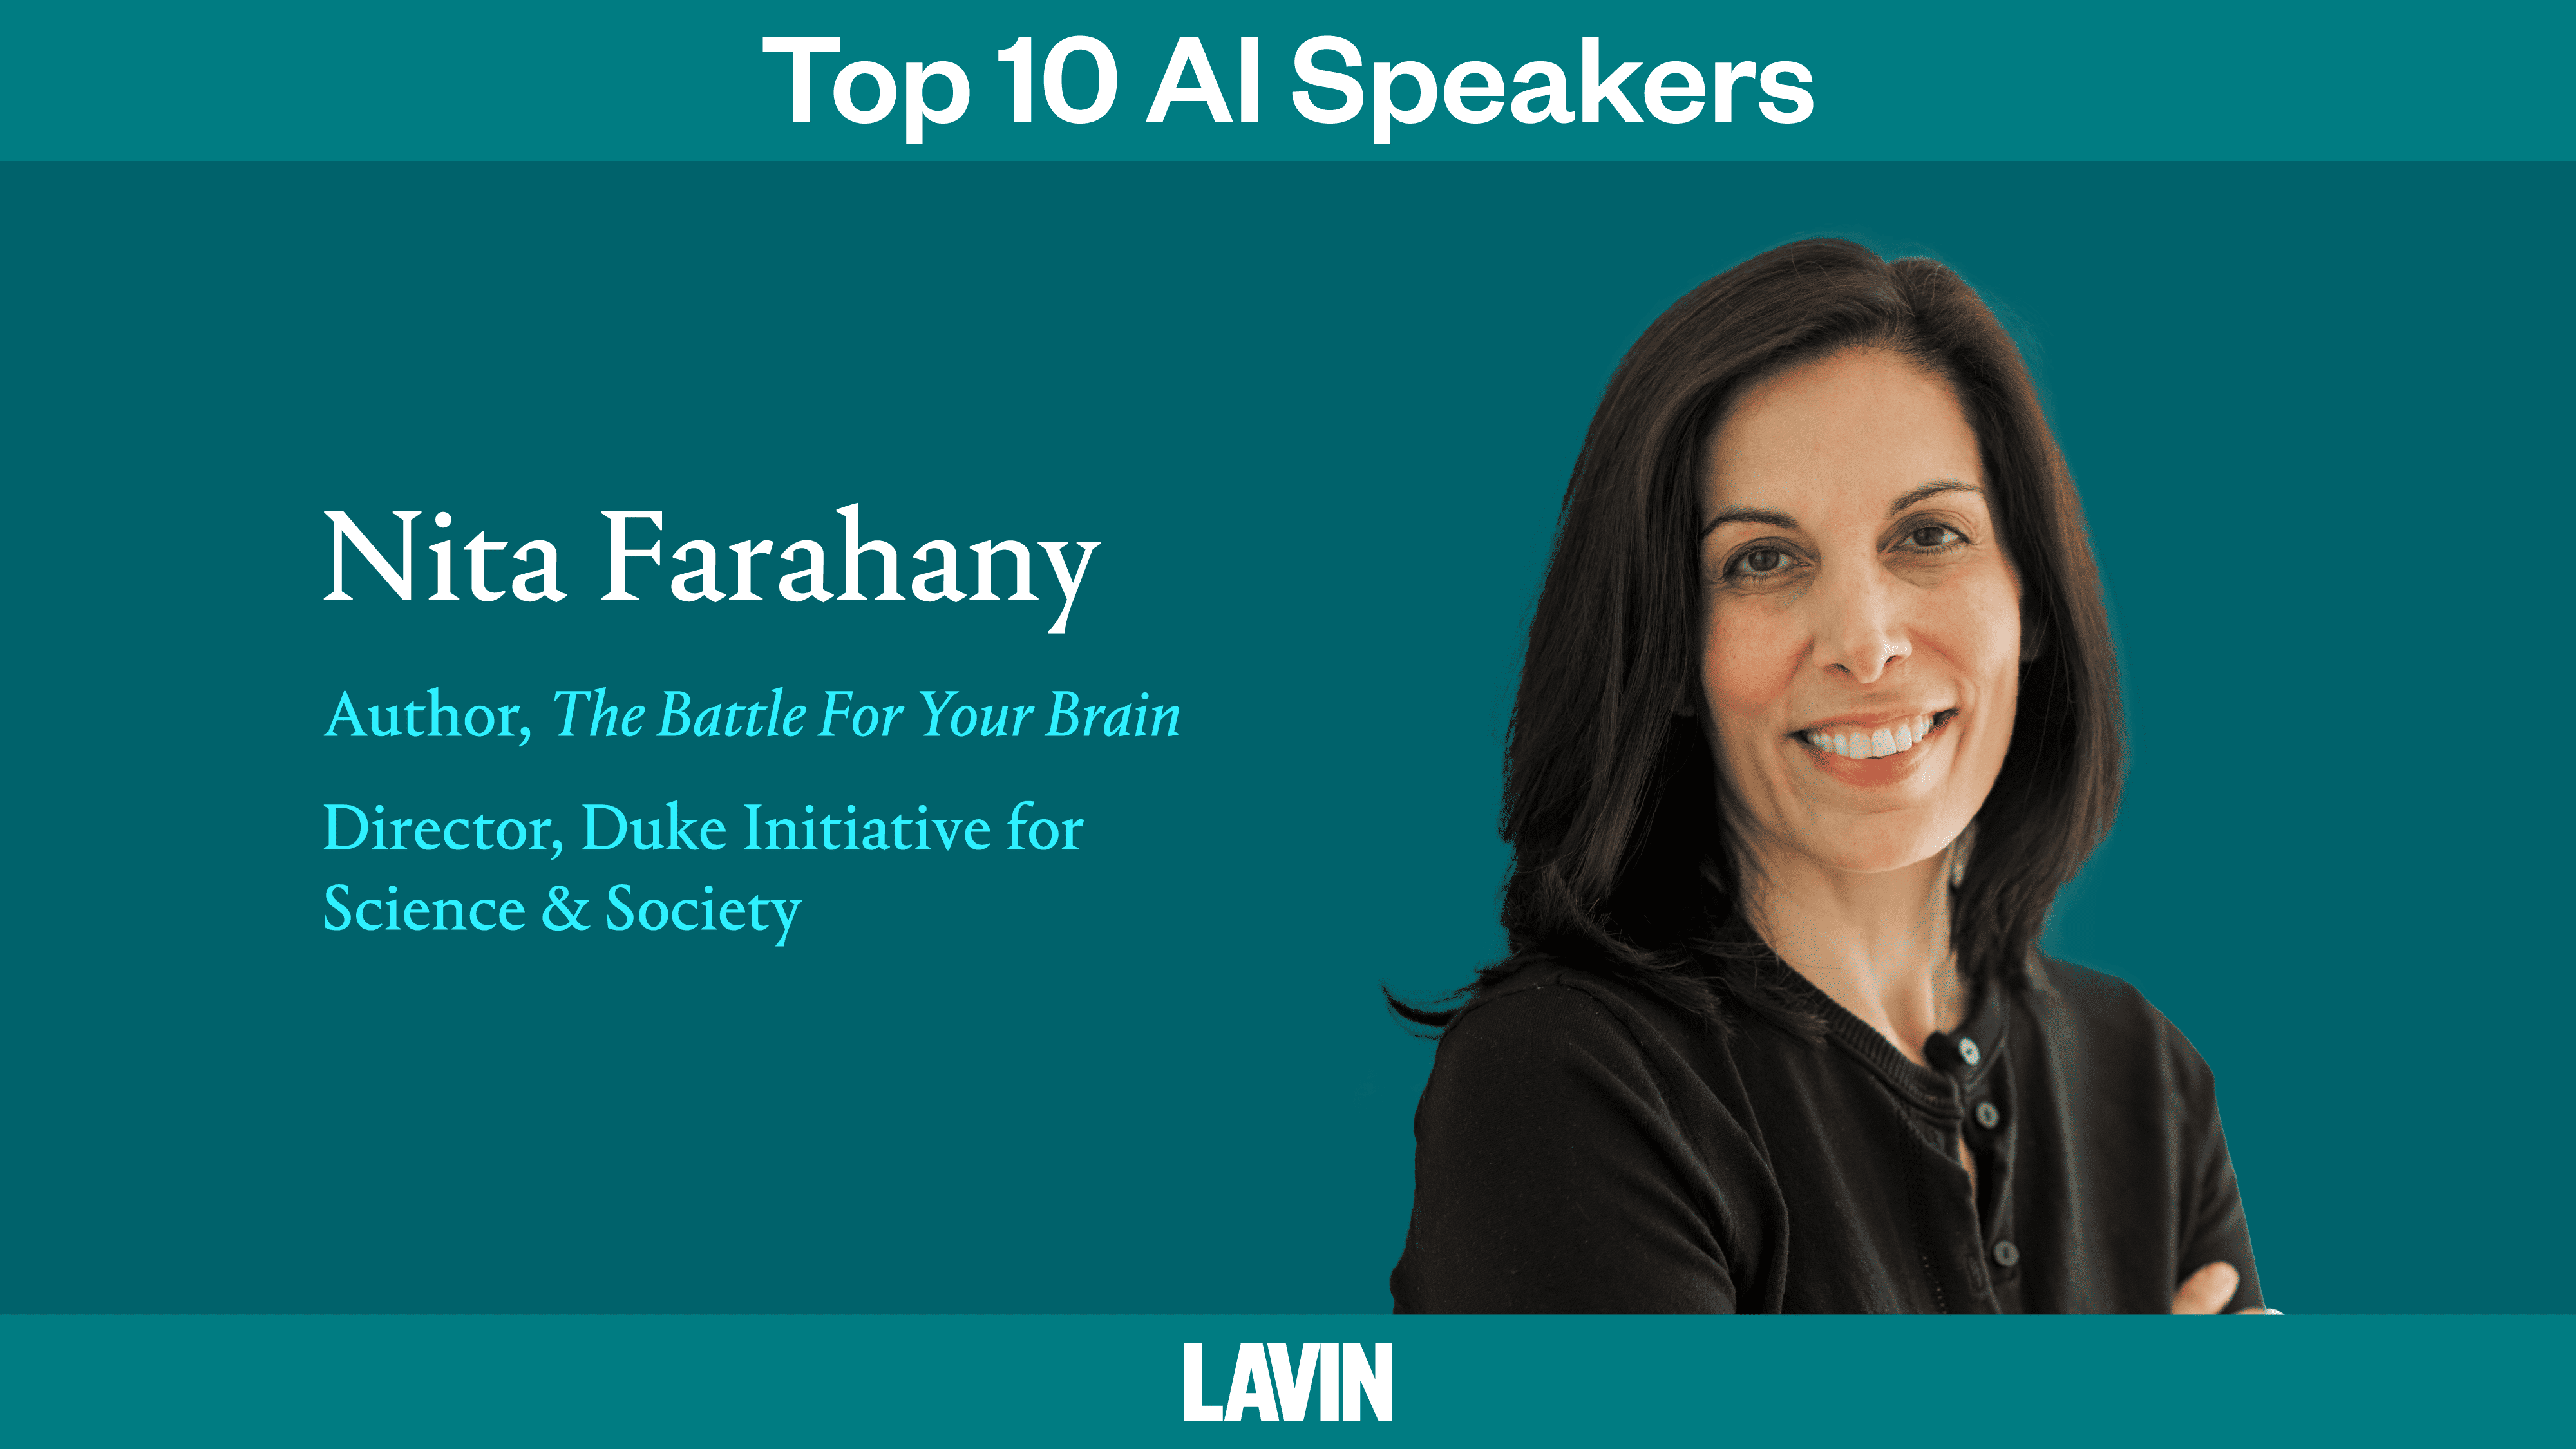 Top 10 AI Speaker Nita Farahany: The New Frontier of AI? Your Brain